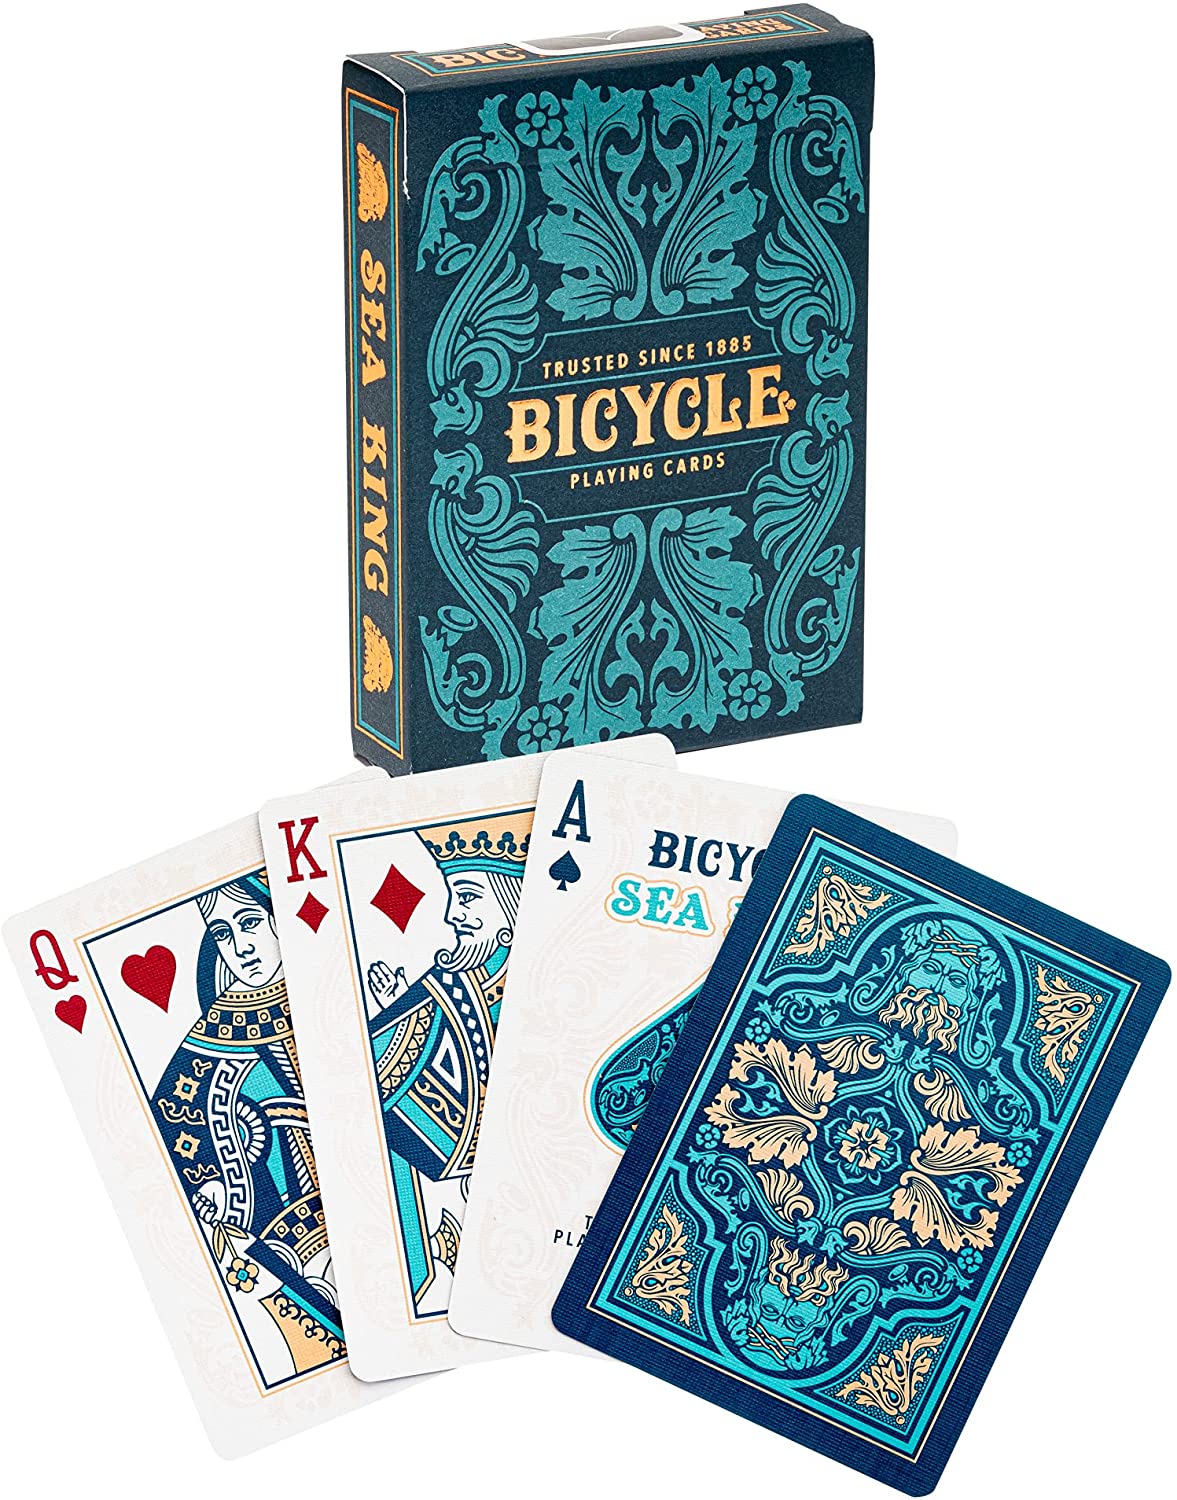 Bicycle Playing Cards – Sea King